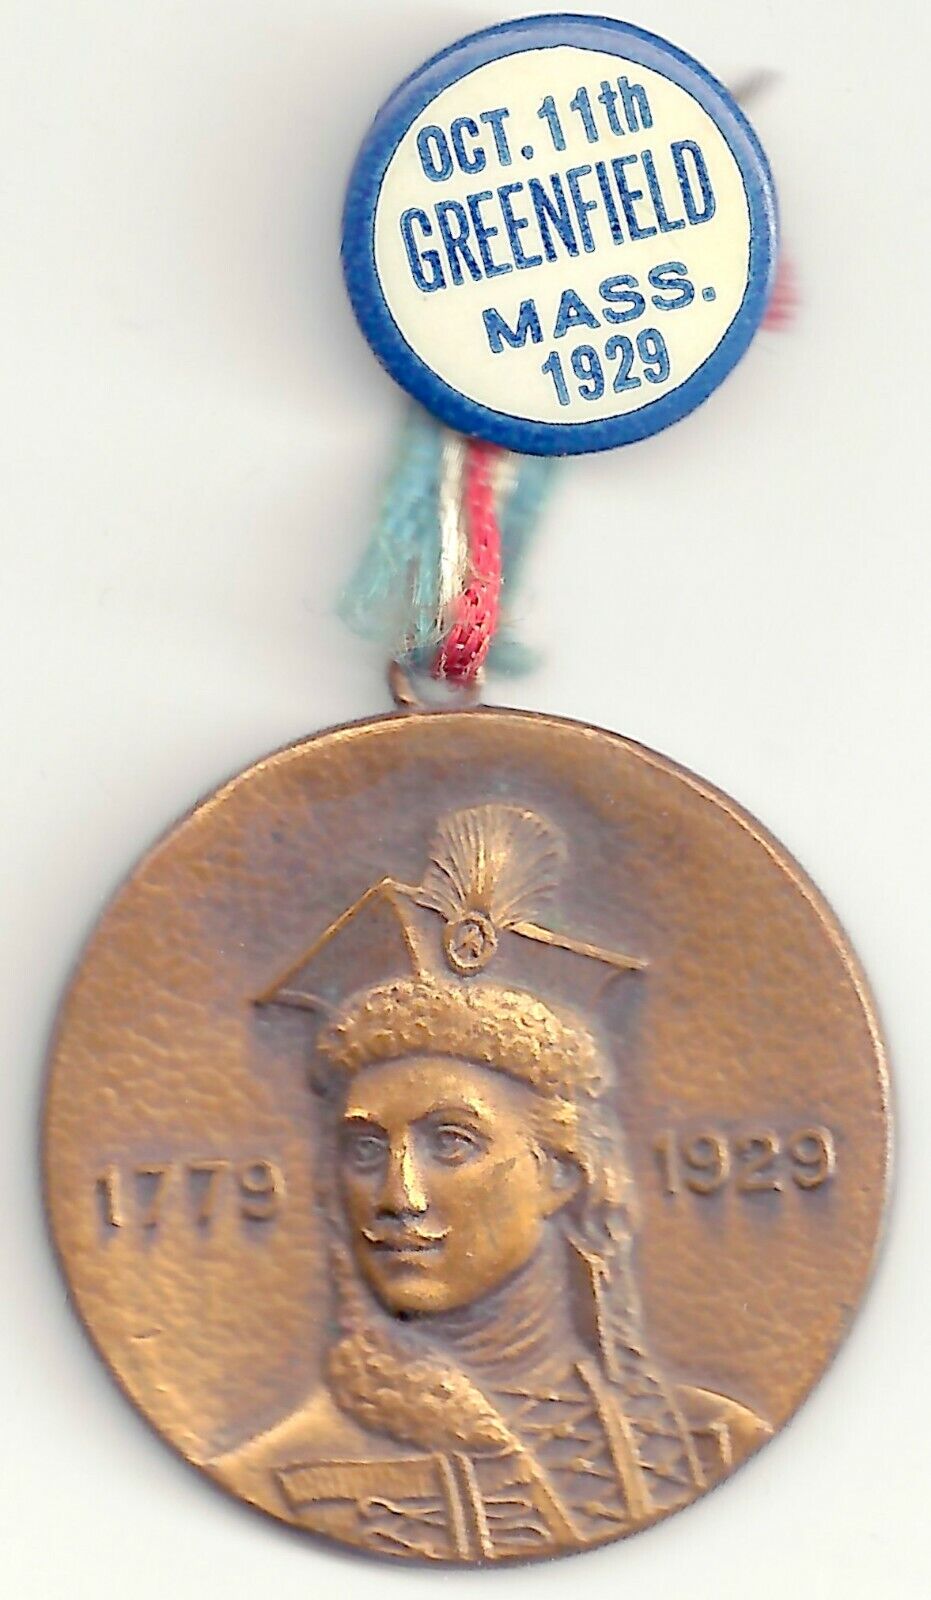 1779-1929 Greenfield MA Casimer Pulaski Patriot BRZ Medal & Pin ~150 Anniversary